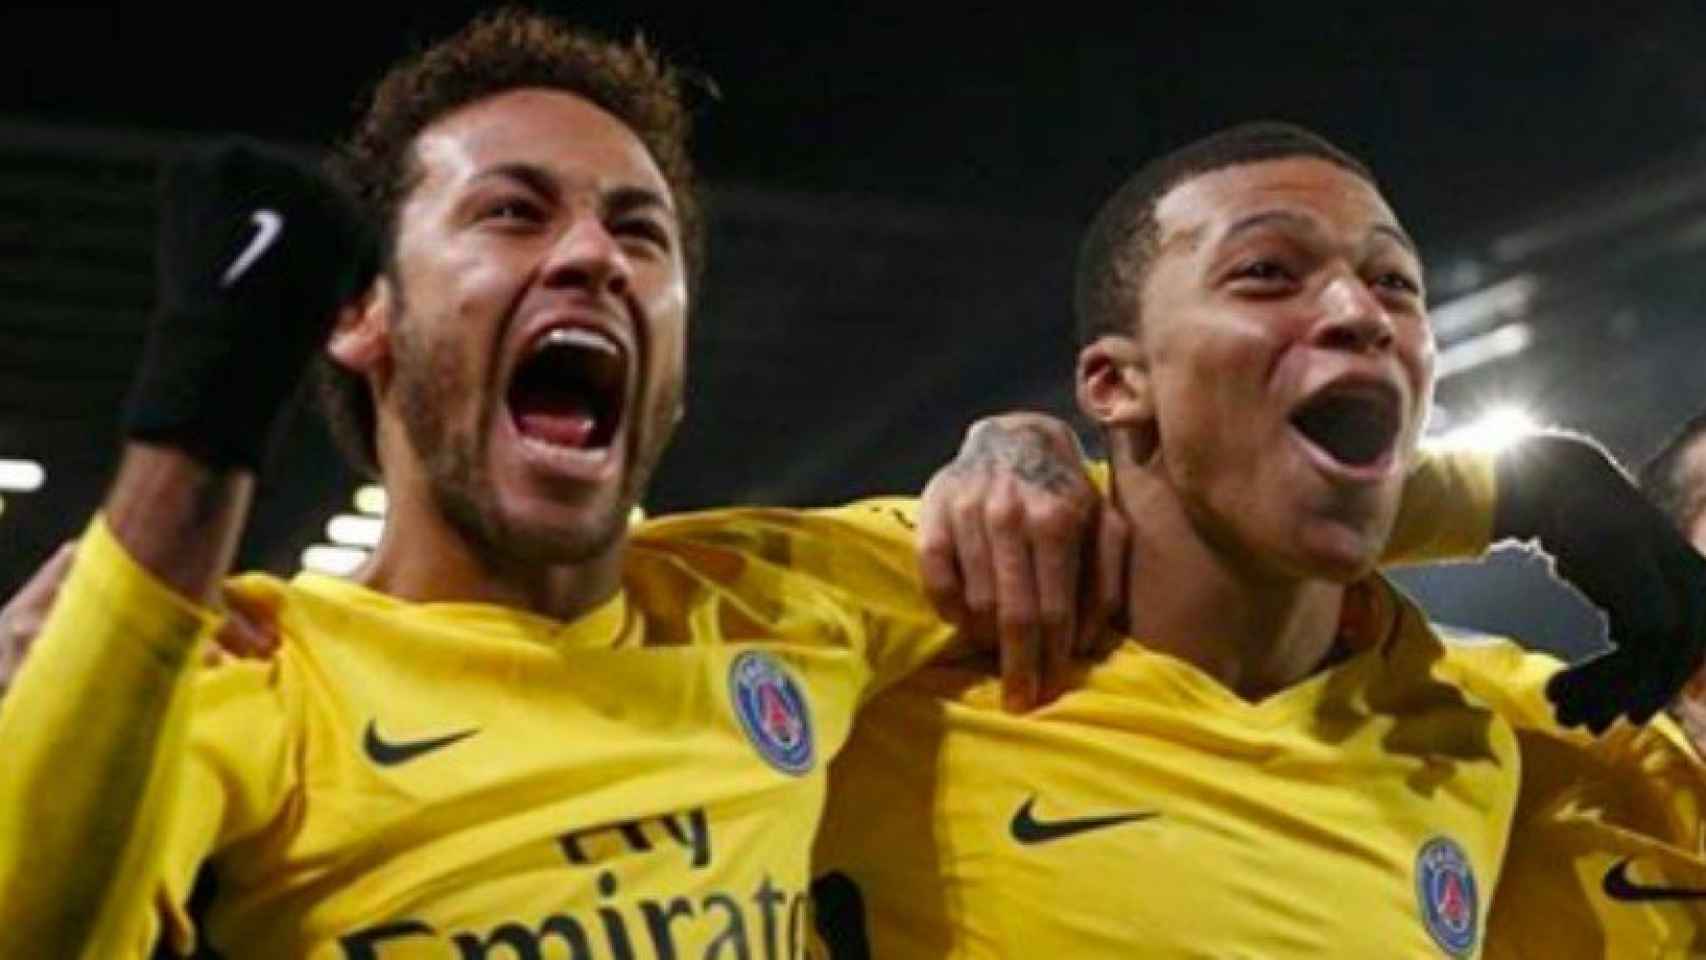 Neymar y Mbappé. Foto Instagram (@kmbappe29)